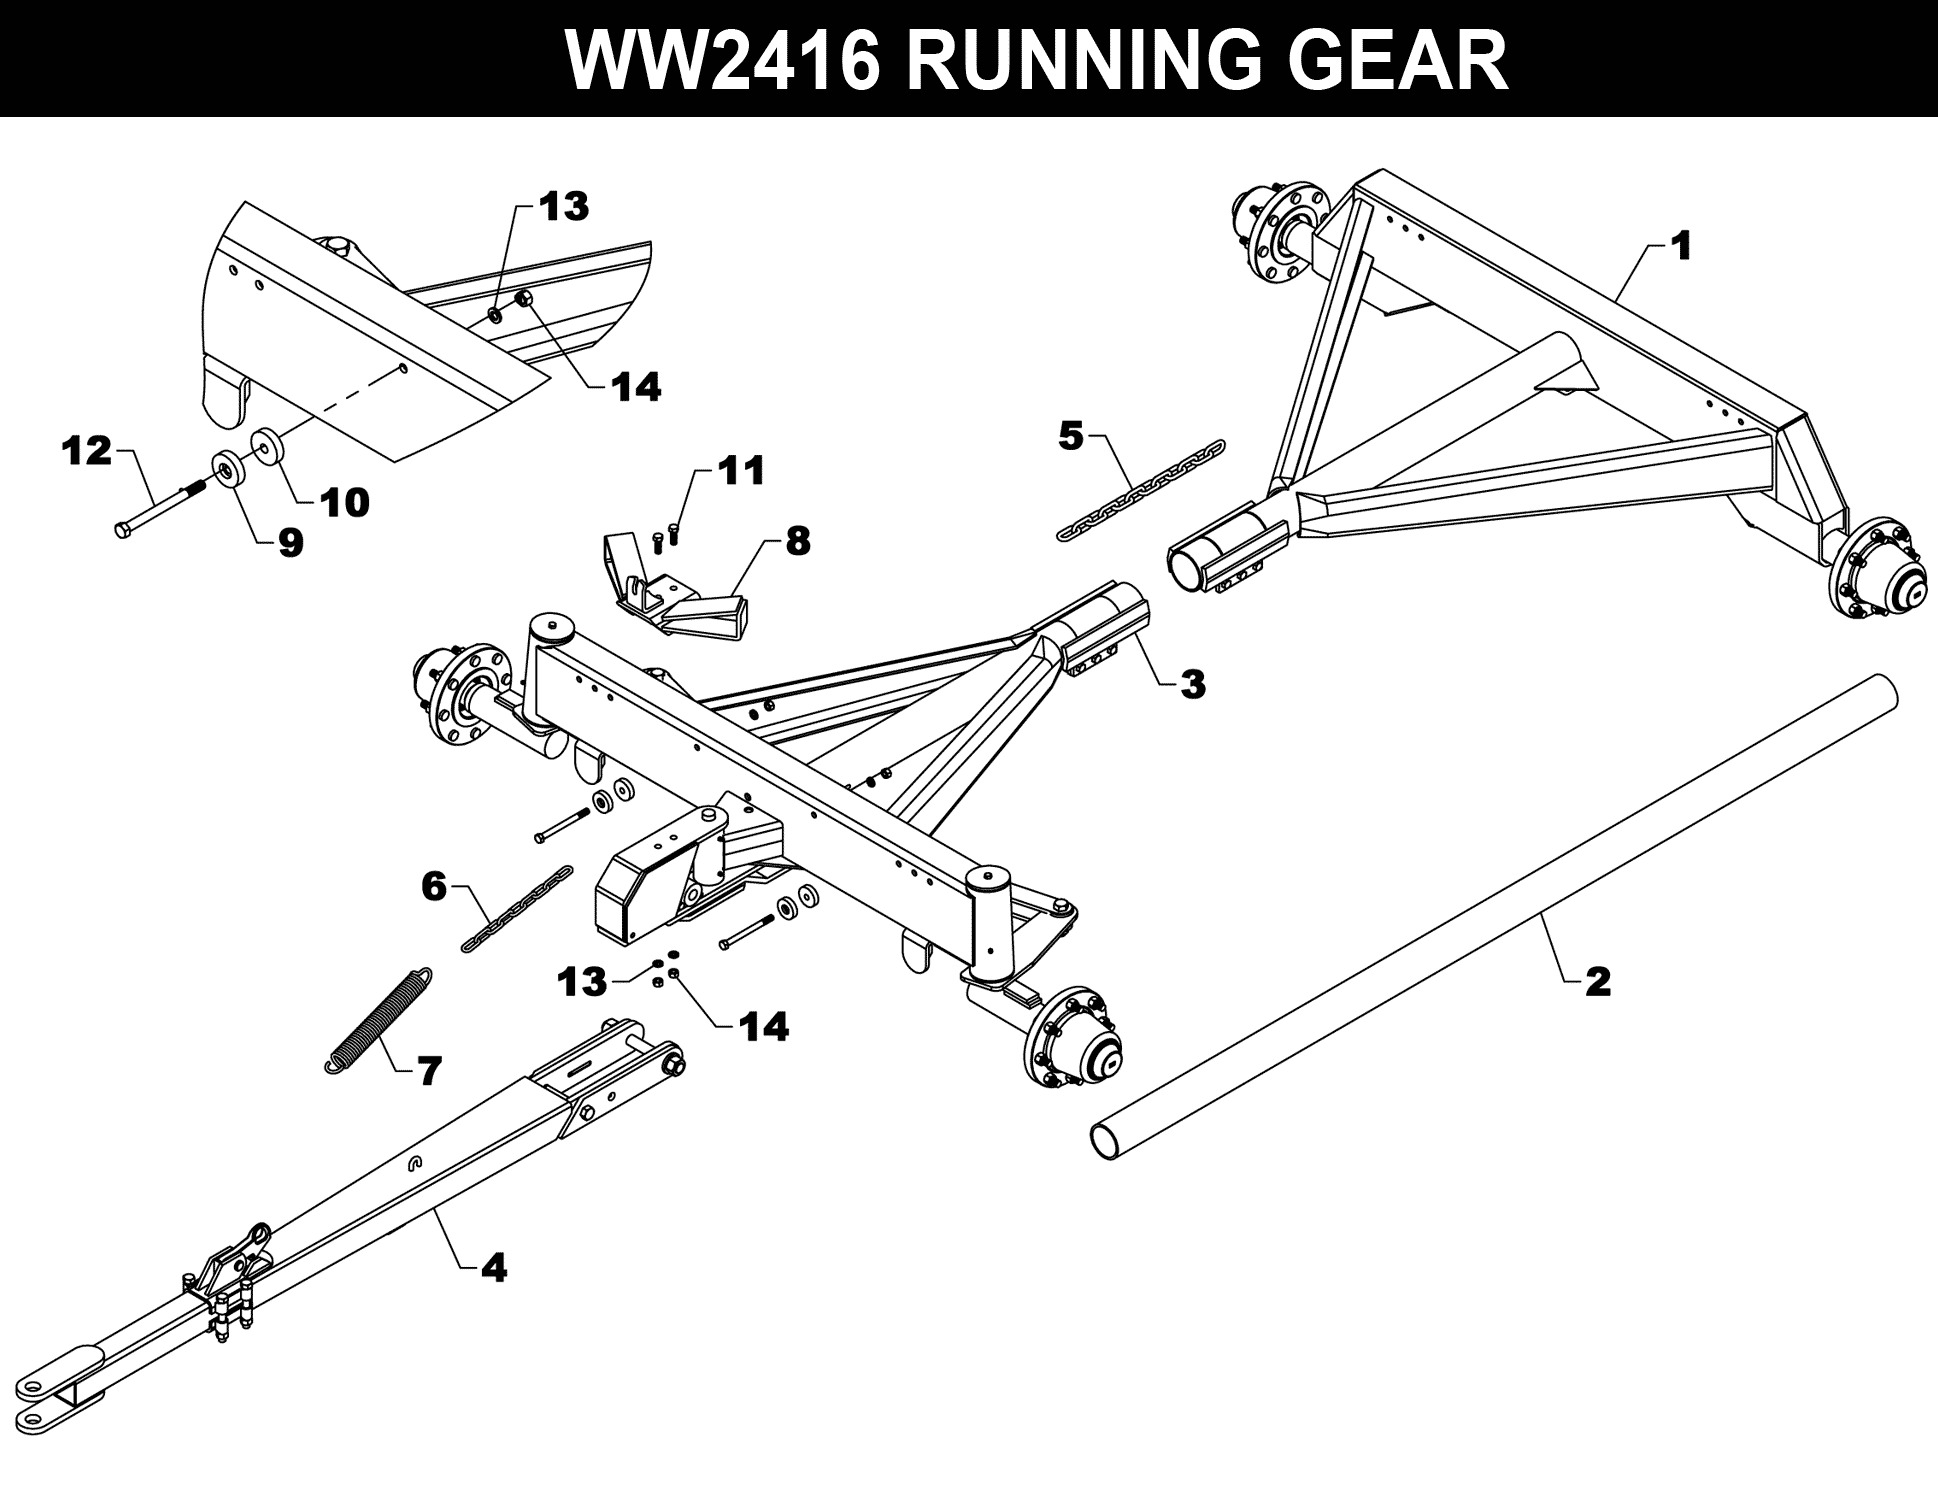 WW-2416 Running Gear 